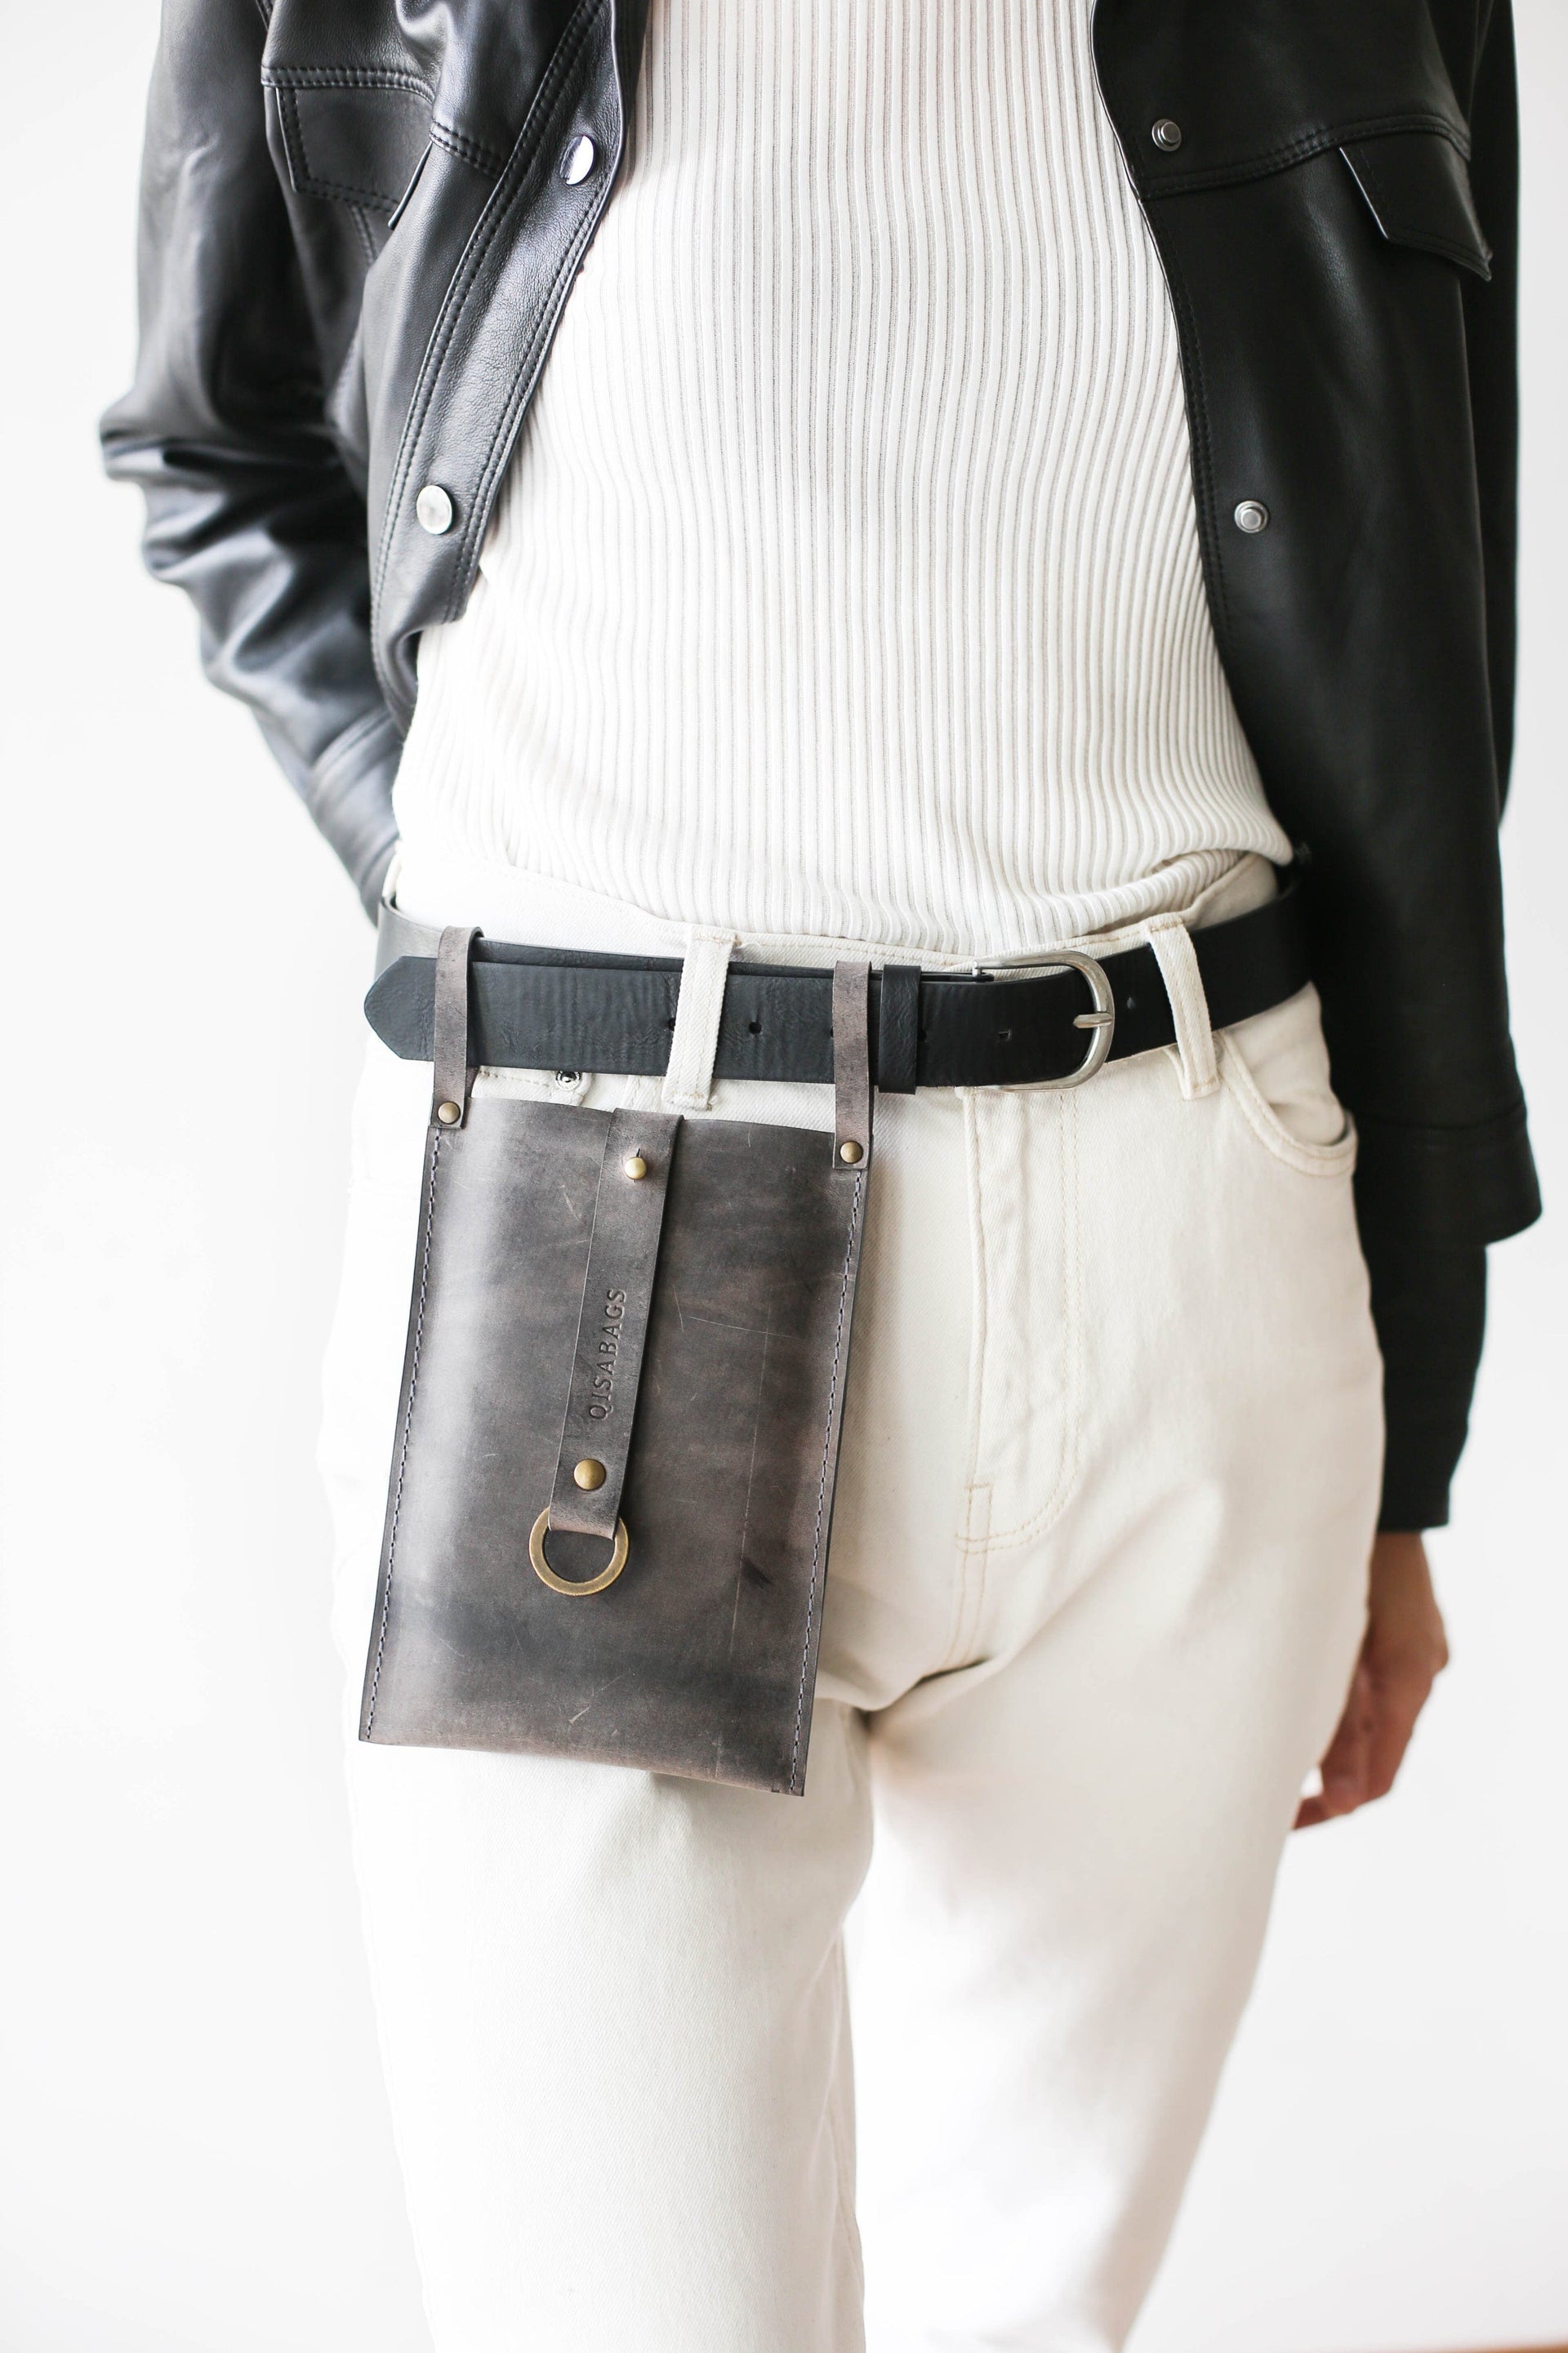 Leather waist bag for phone